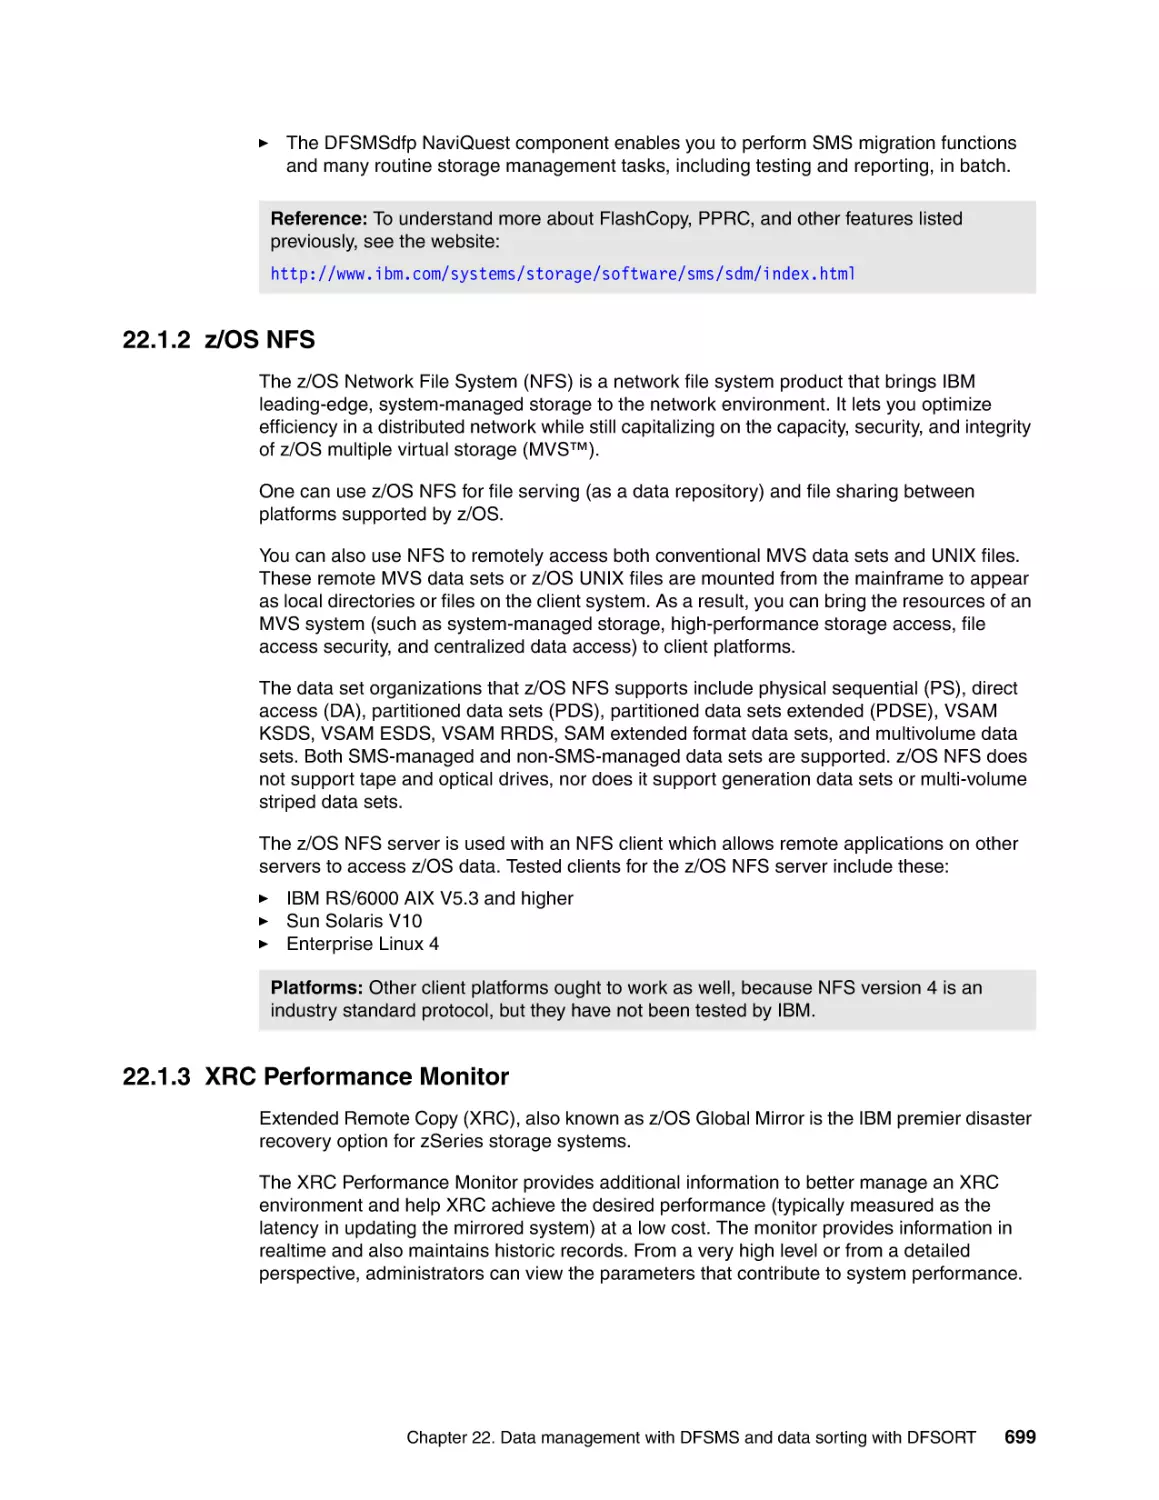 22.1.2 z/OS NFS
22.1.3 XRC Performance Monitor